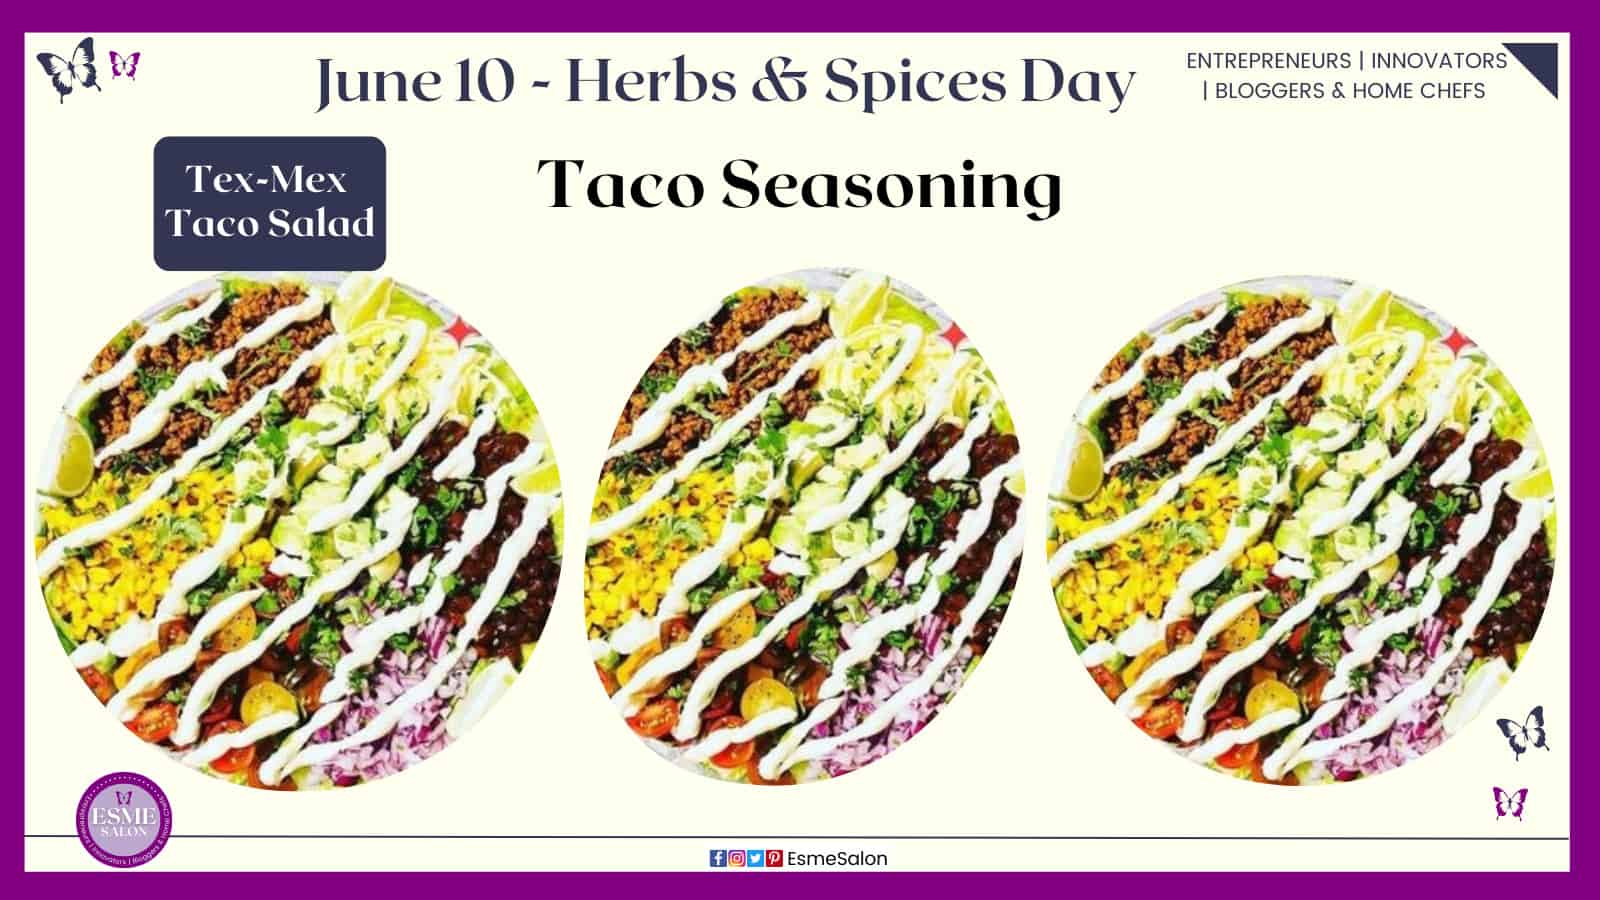 an image of a Tex-Mex Taco Salad with Taco Seasoning